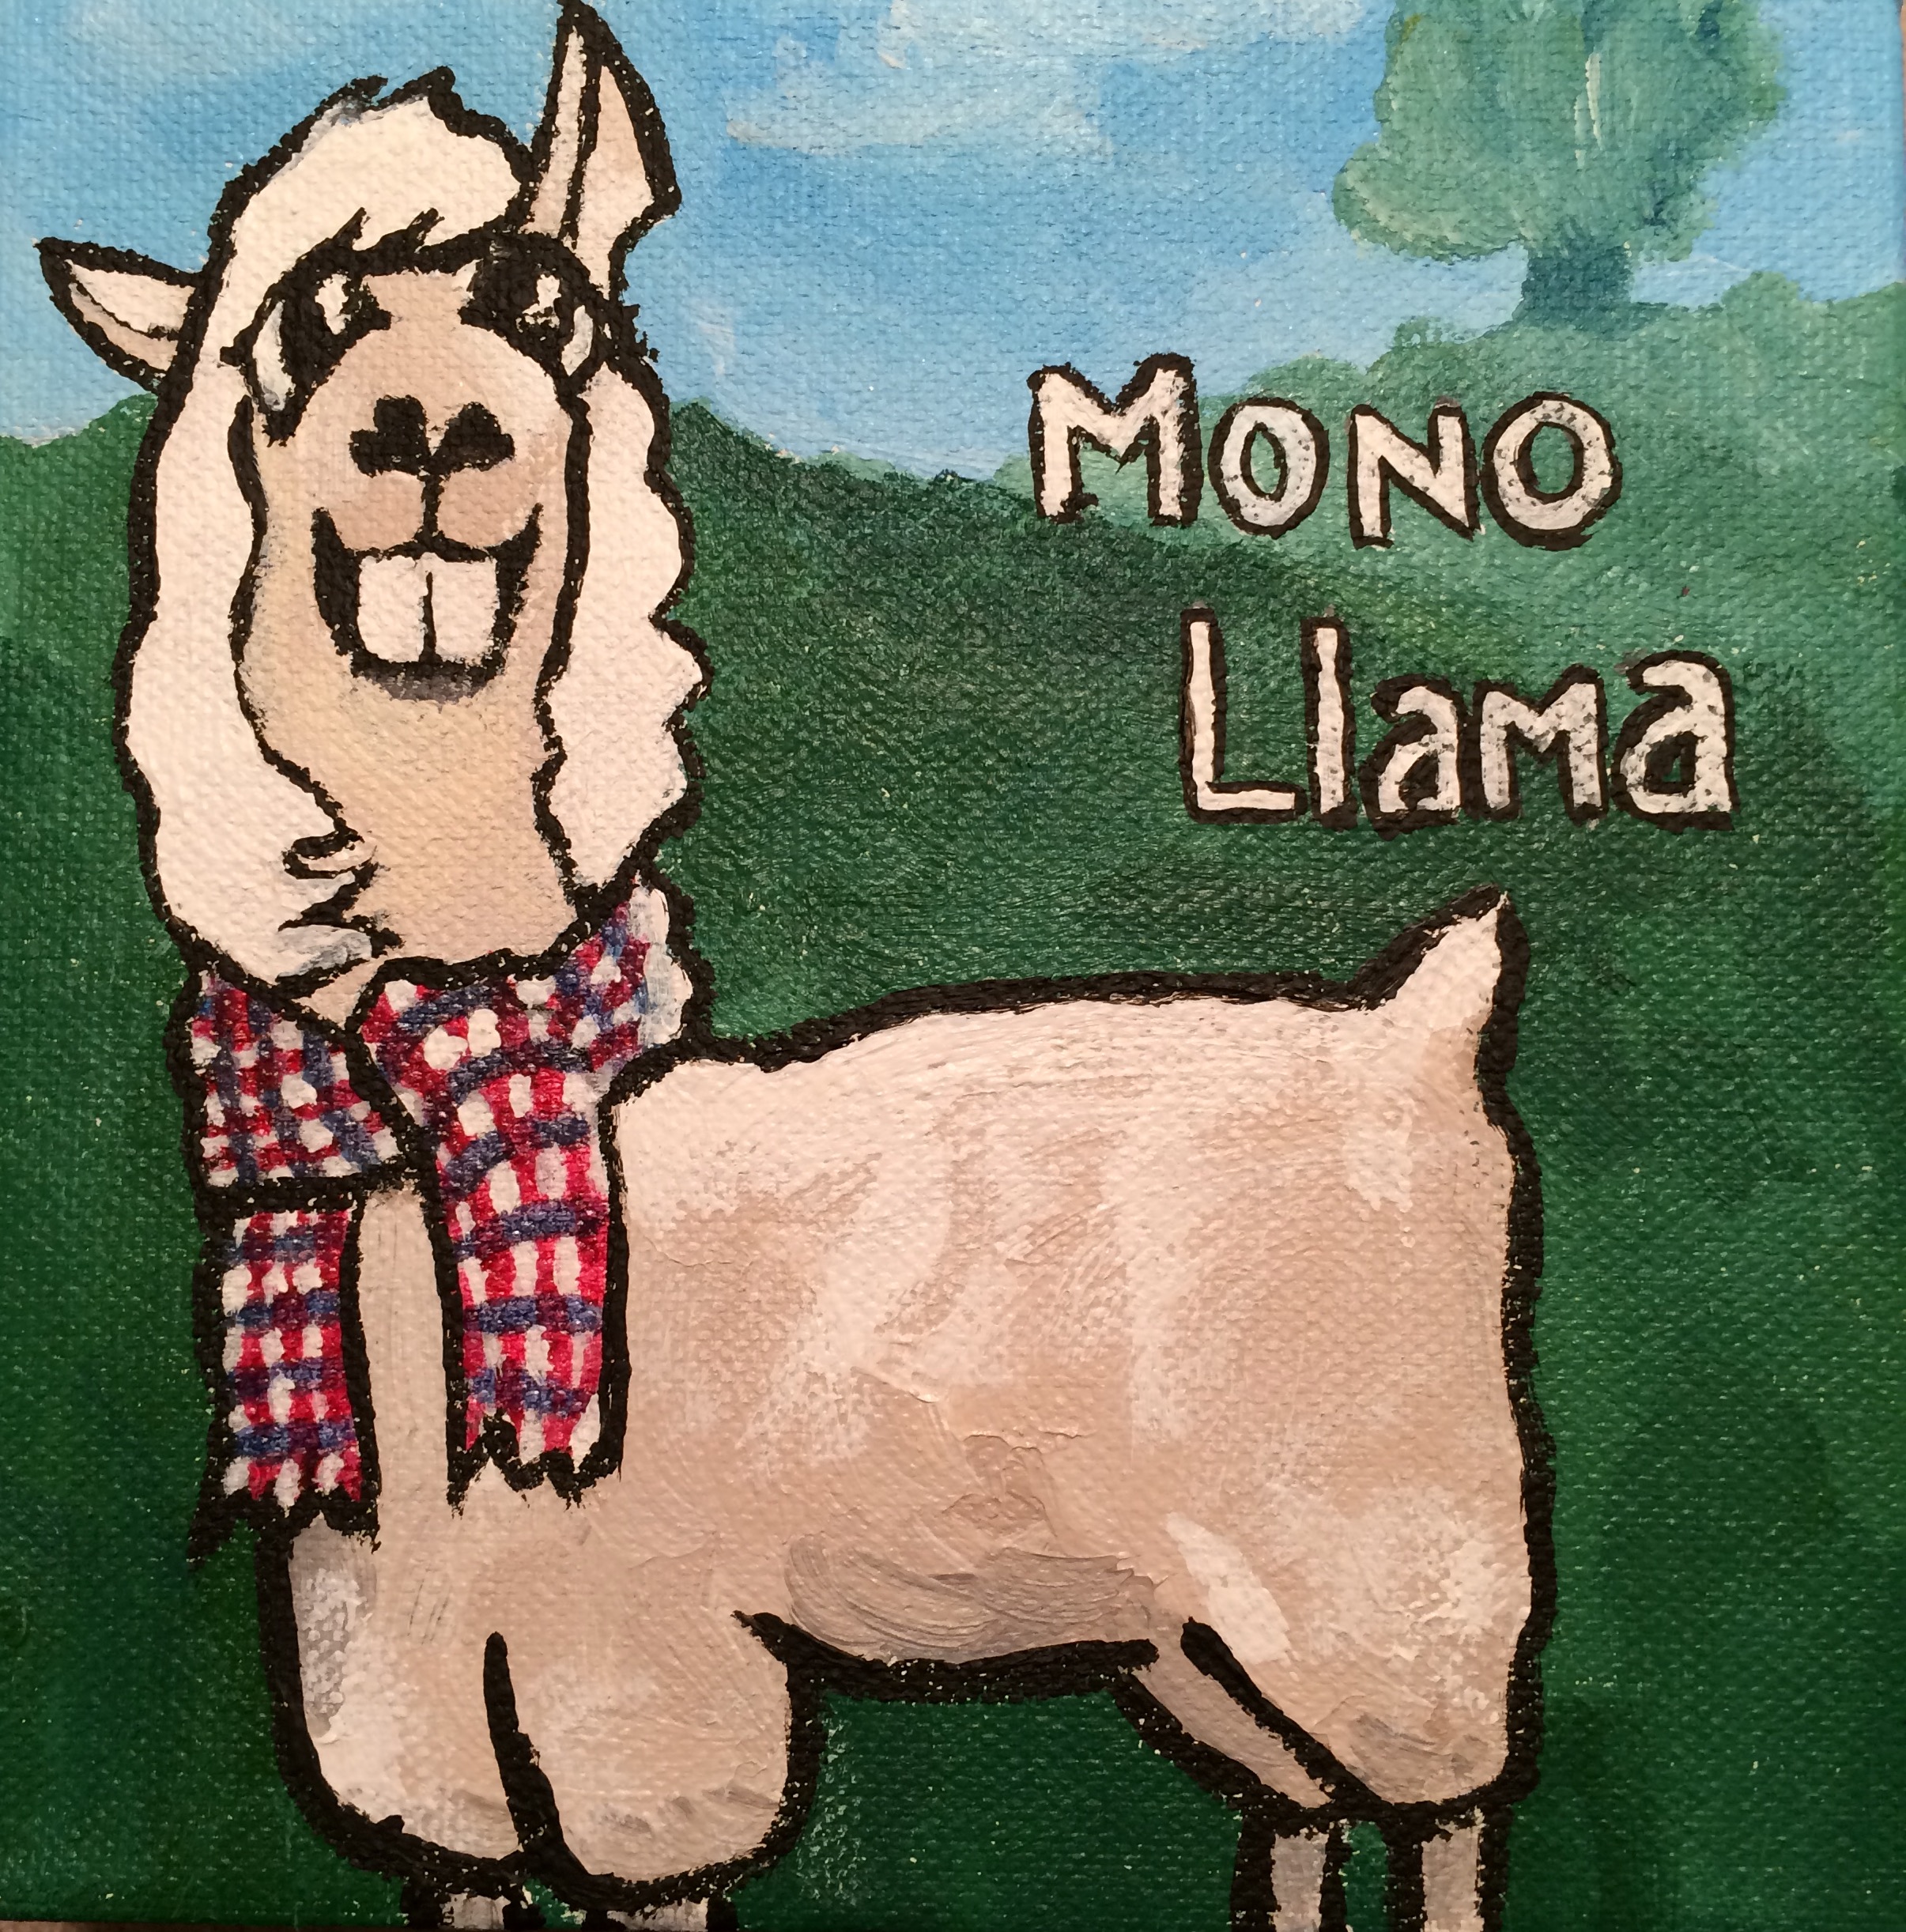 Mono-llama or is it Mona-Llama?